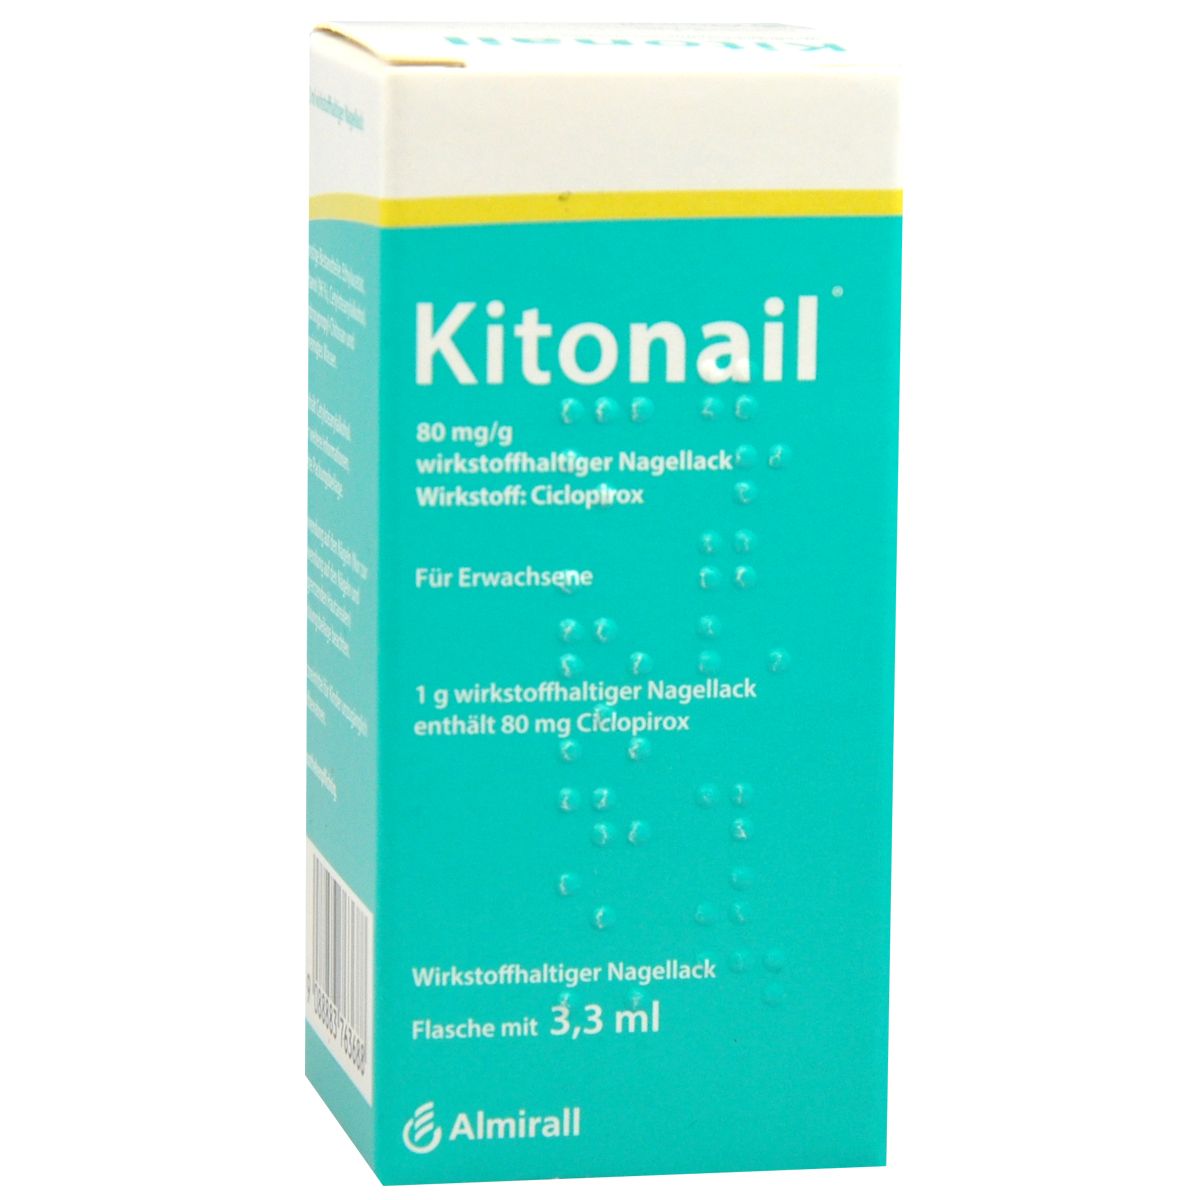 Abbildung Kitonail 80 mg/g wirkstoffhaltiger Nagellack